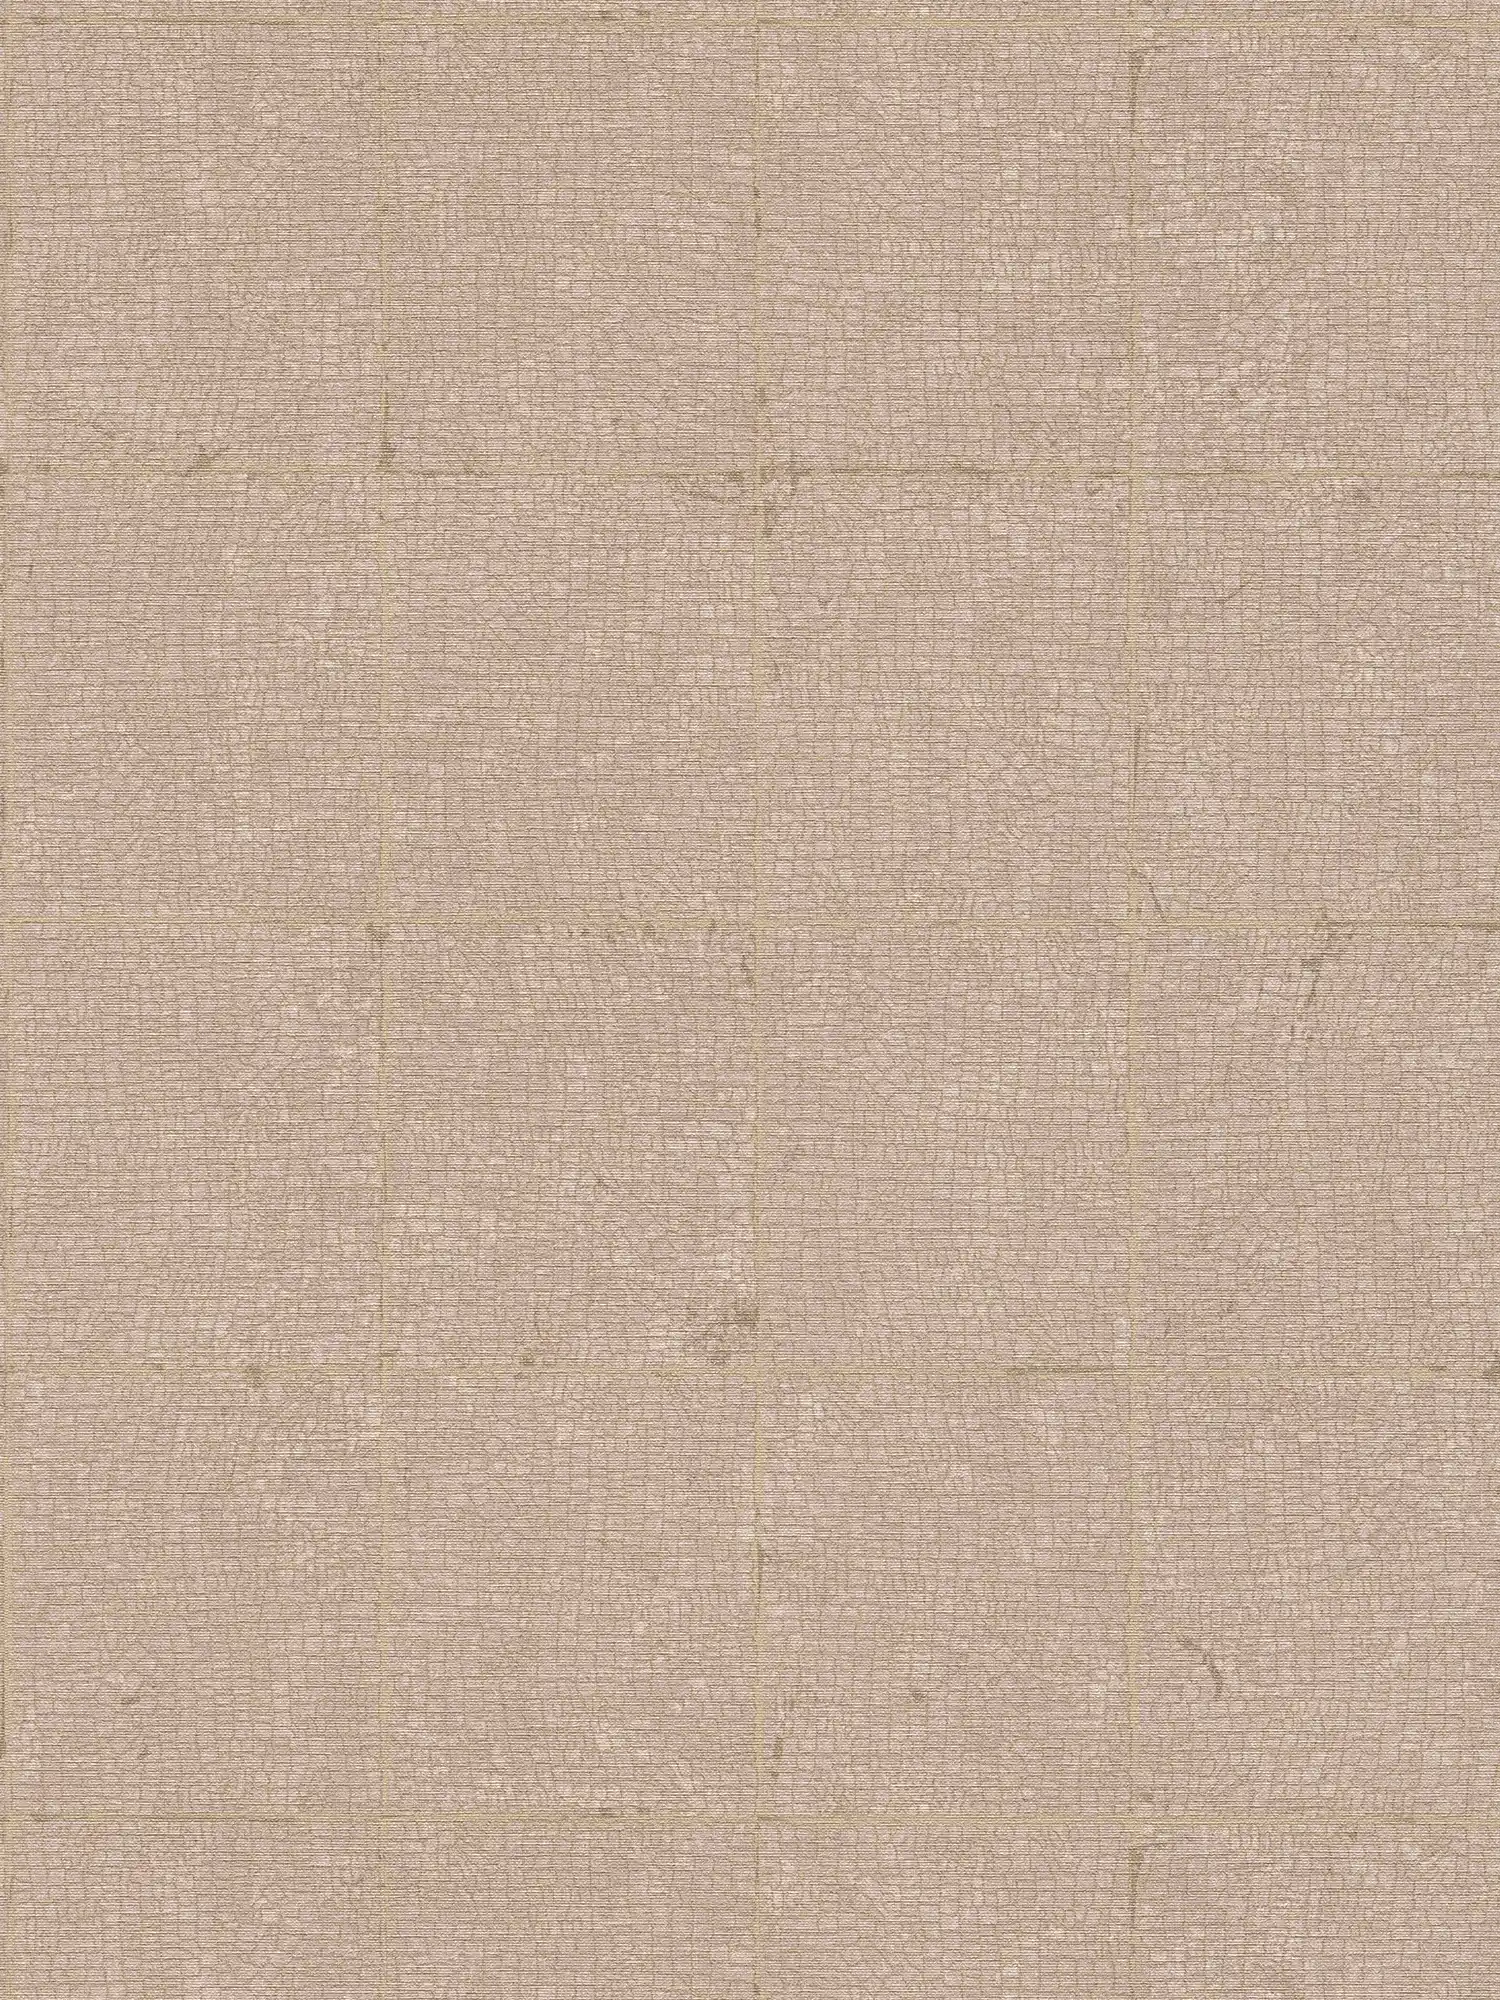         Carta da parati Tile optics effetto usato & crackle - marrone
    